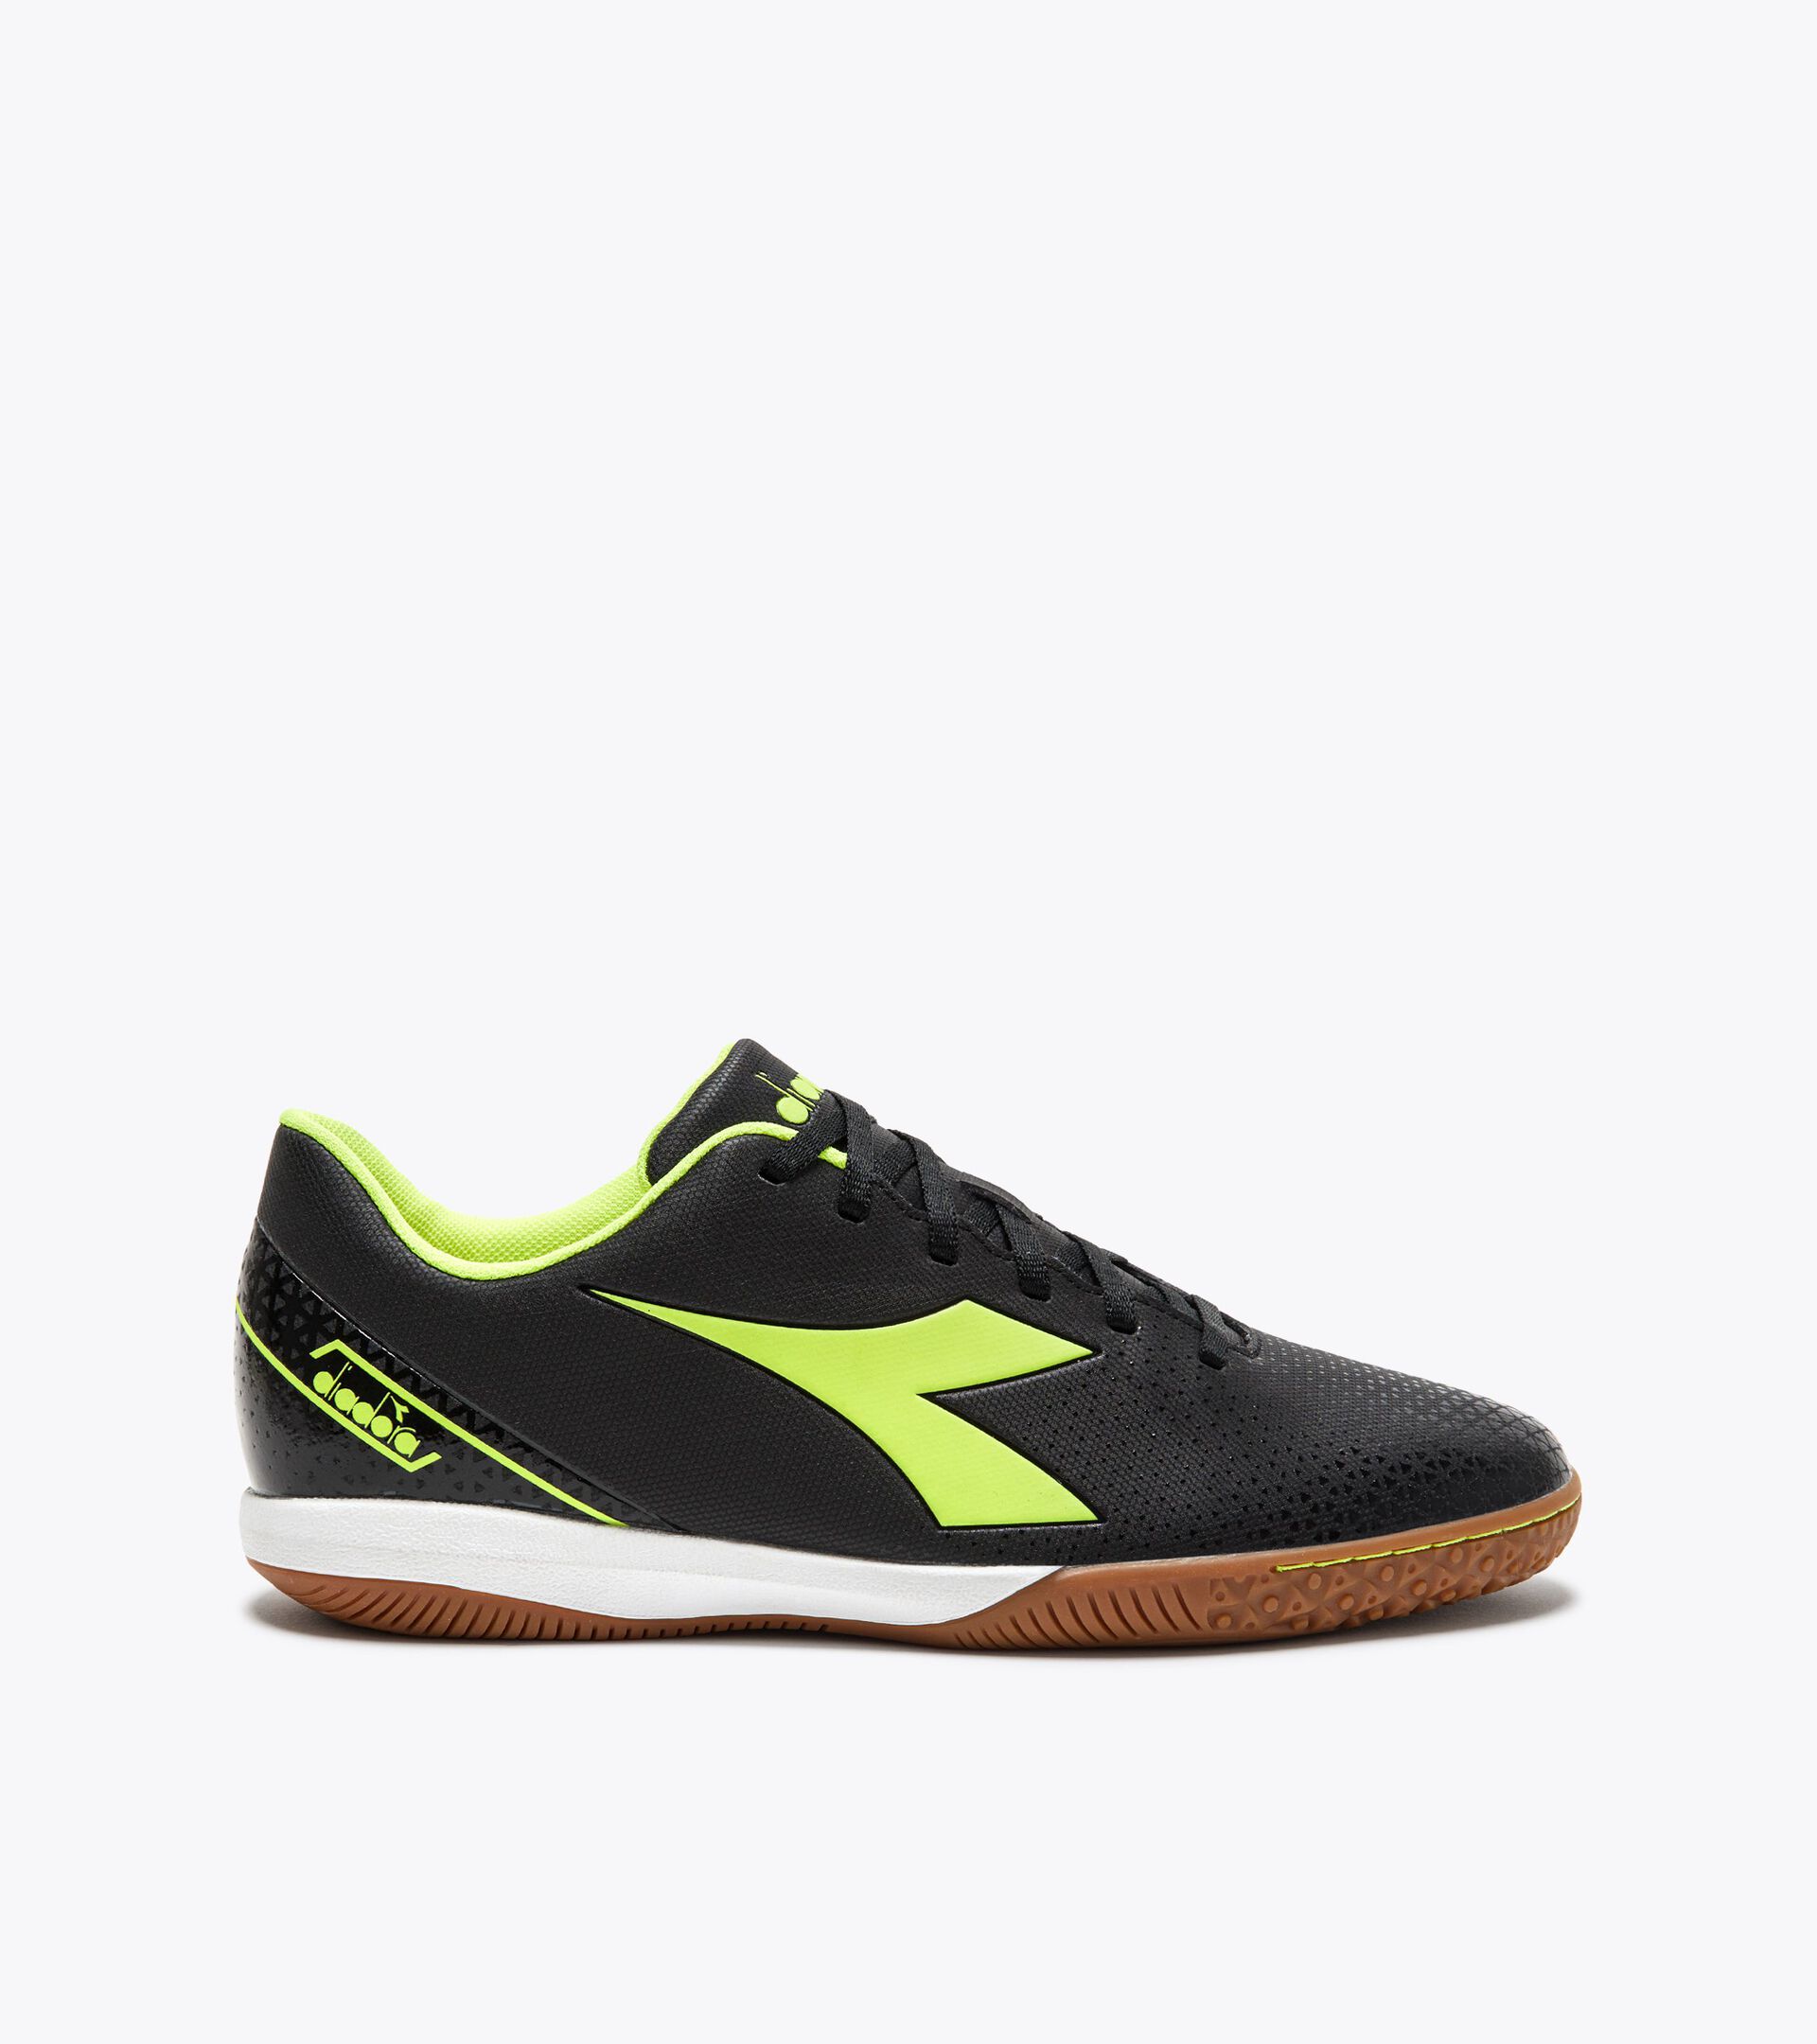  Chaussures De Futsal Homme - Chaussures De Futsal Homme /  Chaussures De Sport Ho : Mode